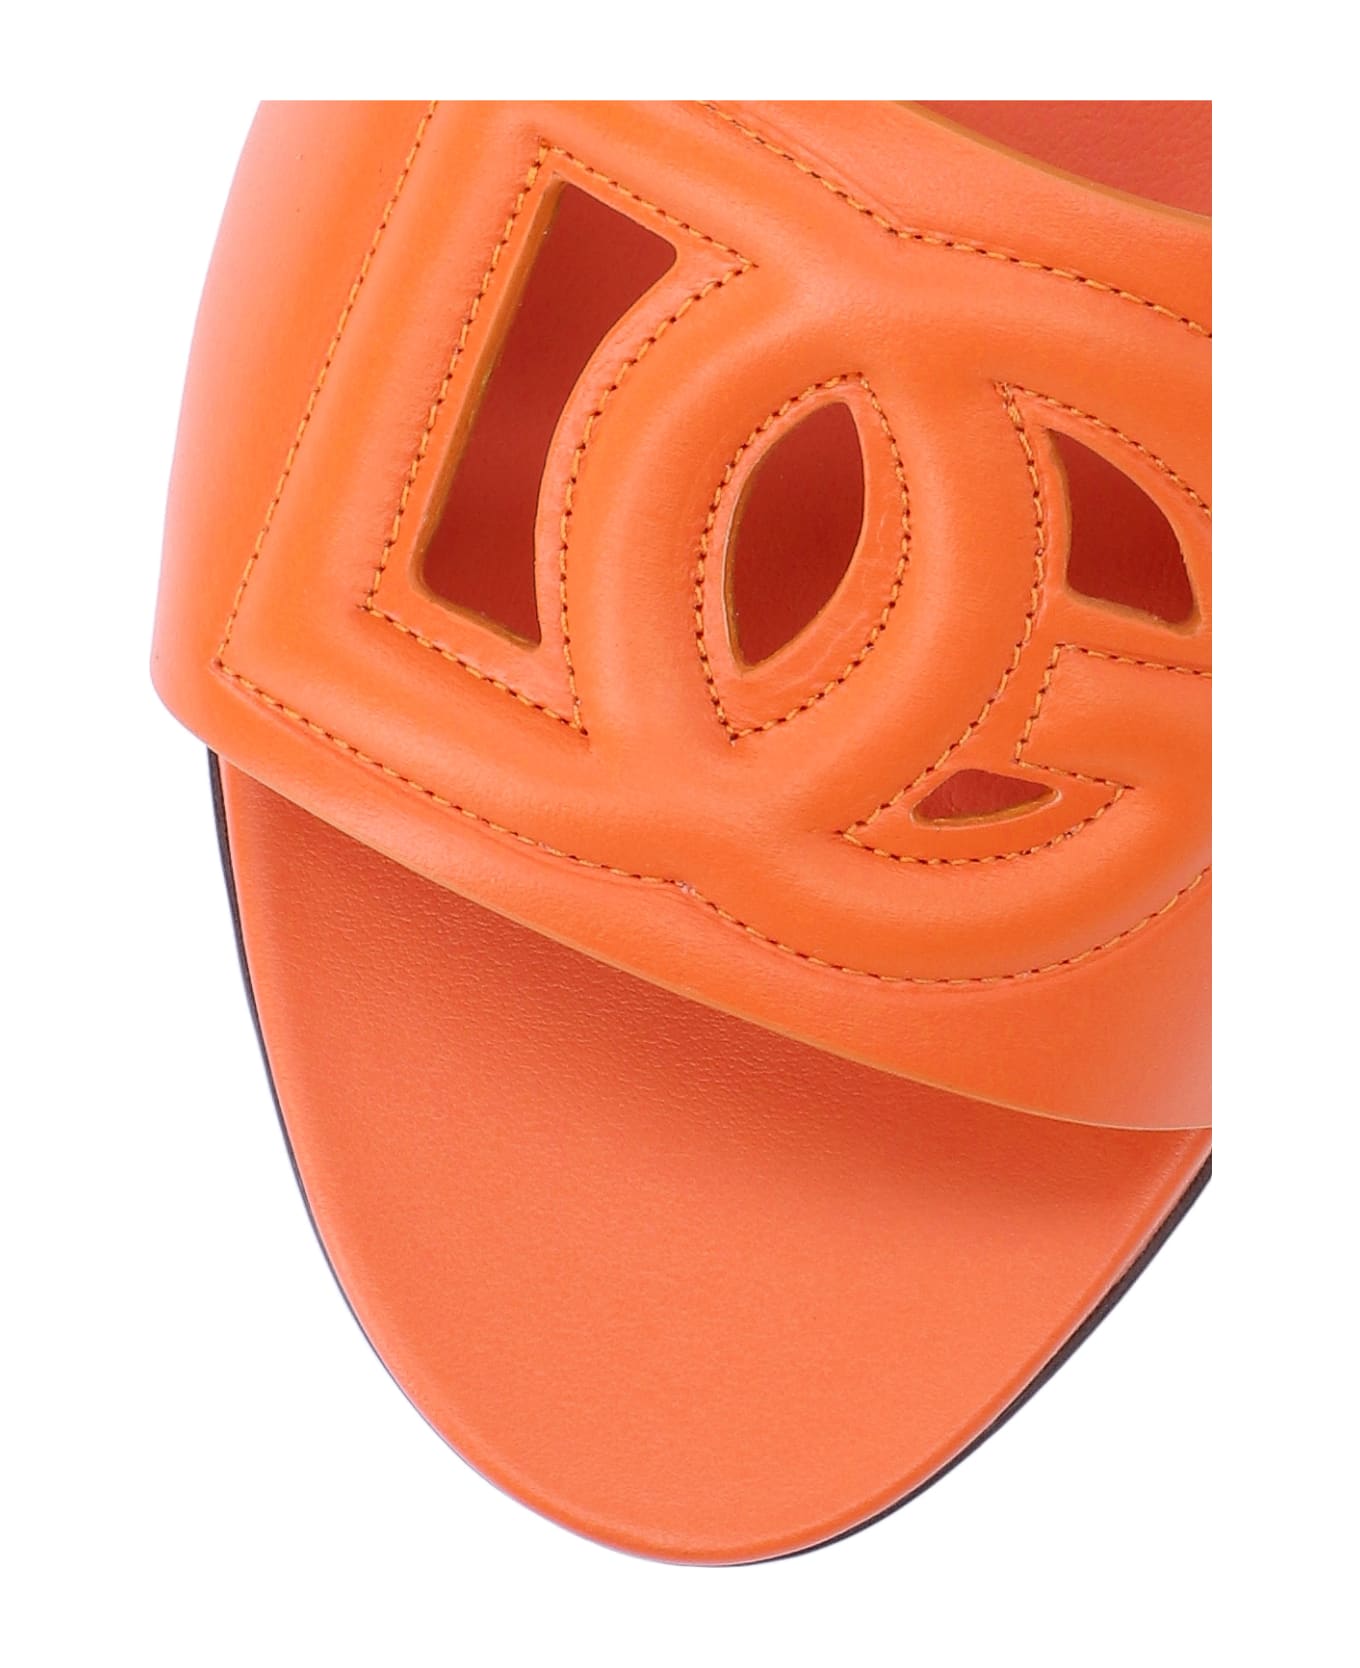 Dolce & Gabbana Logo Slides - Orange サンダル